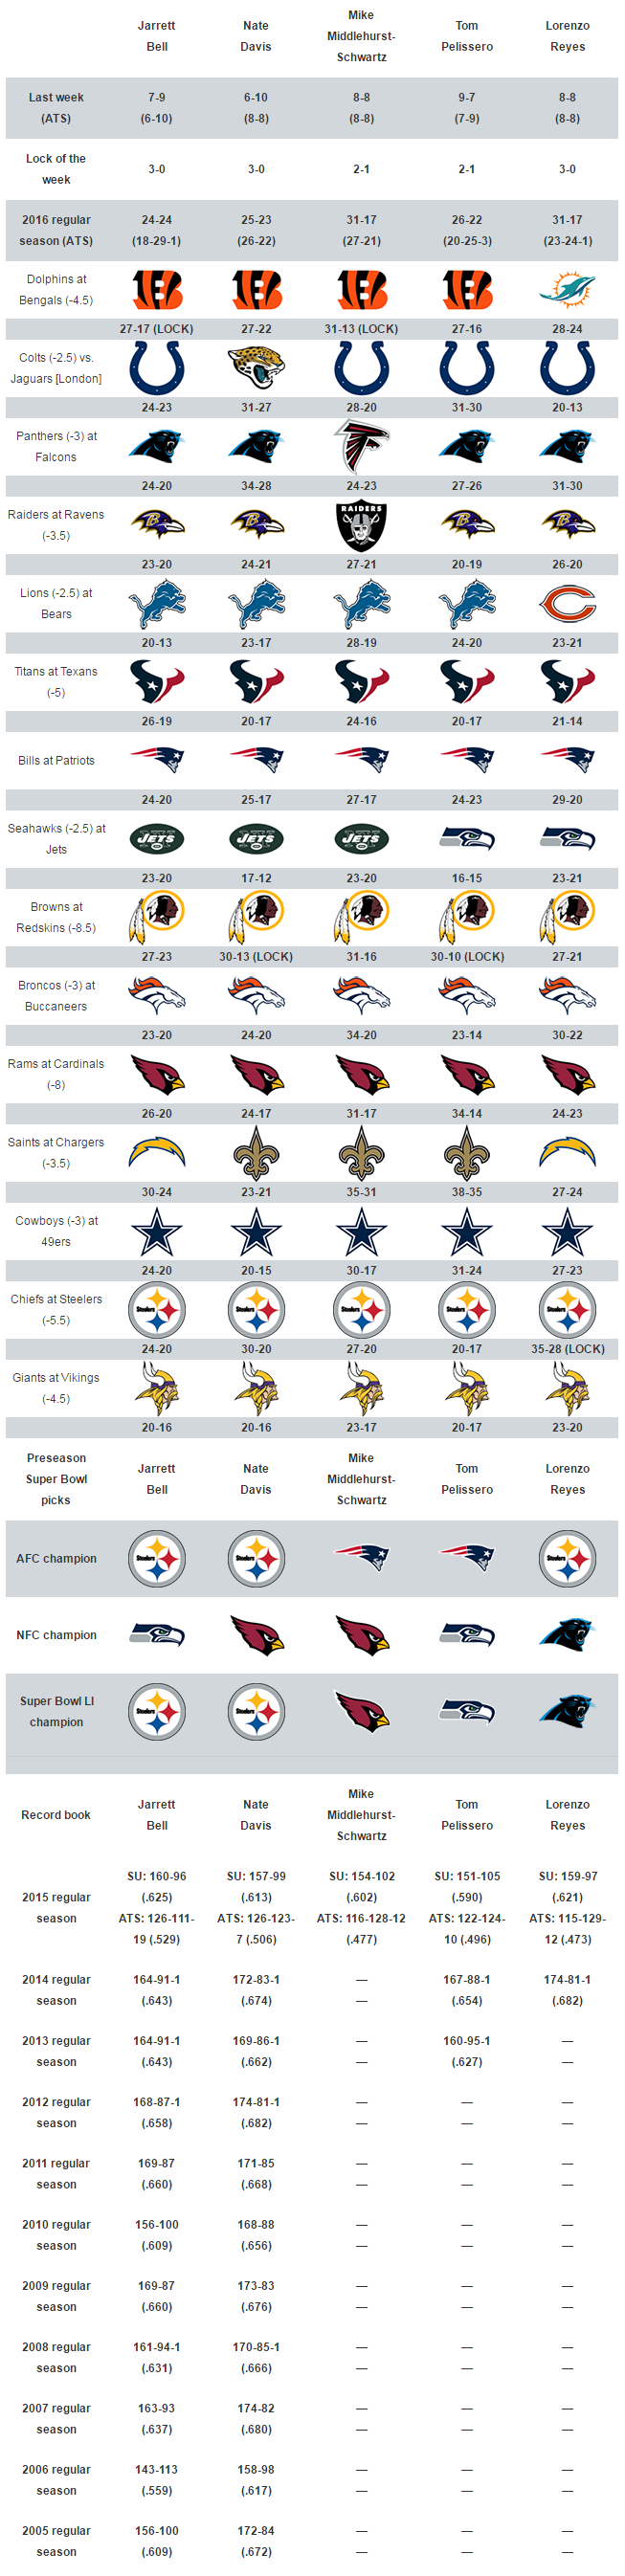 USA TODAY Sports' Week 4 NFL picks: Big games in Pittsburgh, Minnesota